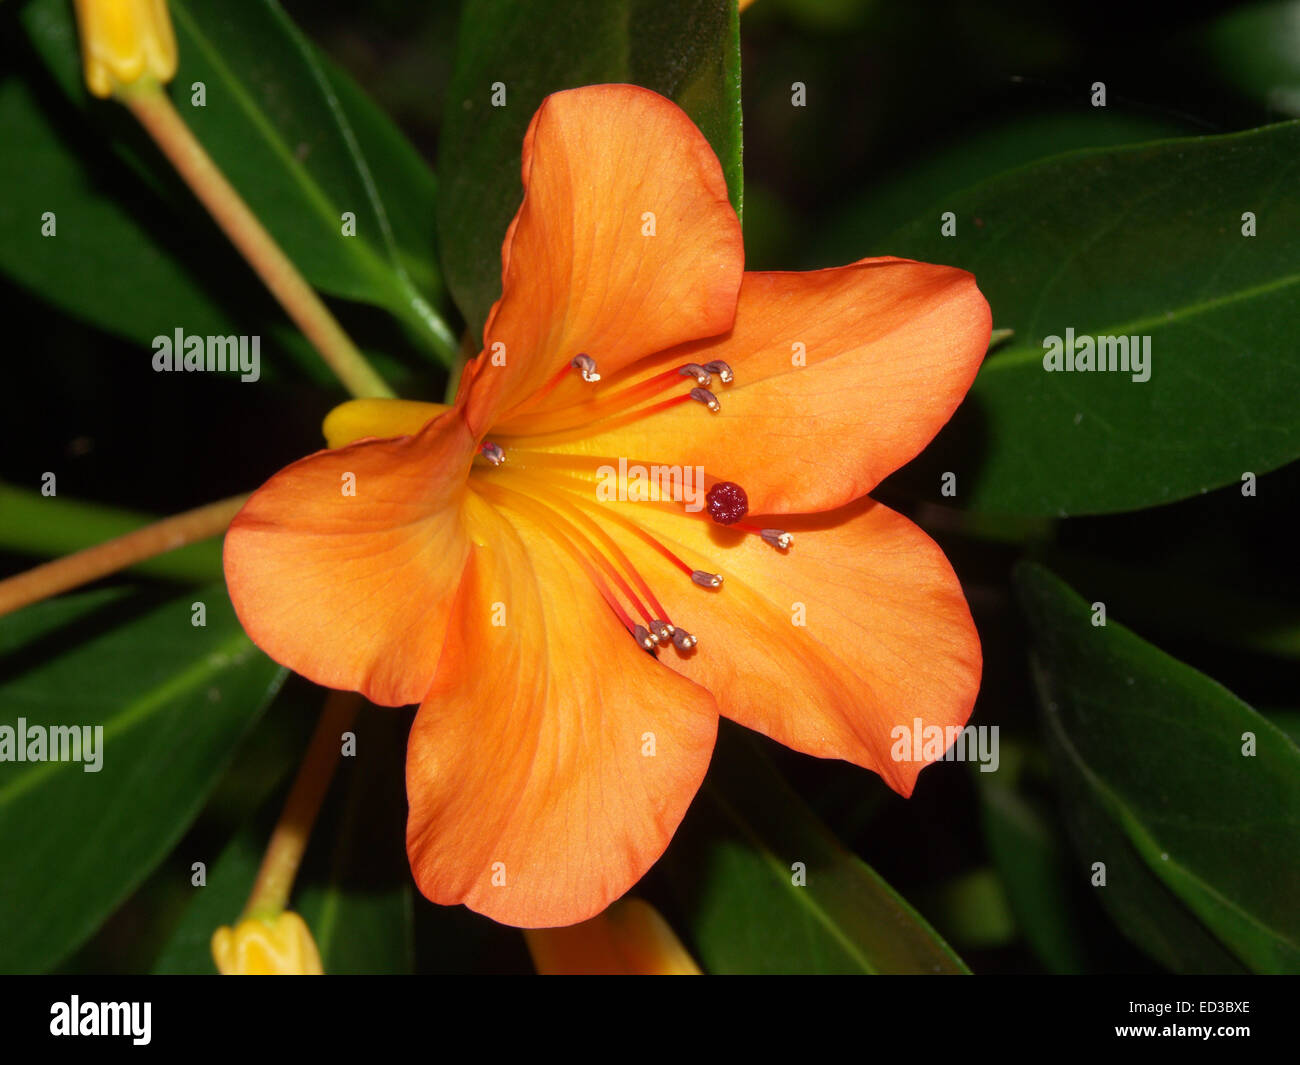 Brilliant orange flower of tropical Vireya rhododendron cultivar 'Orange Way' against background of dark green shiny leaves Stock Photo